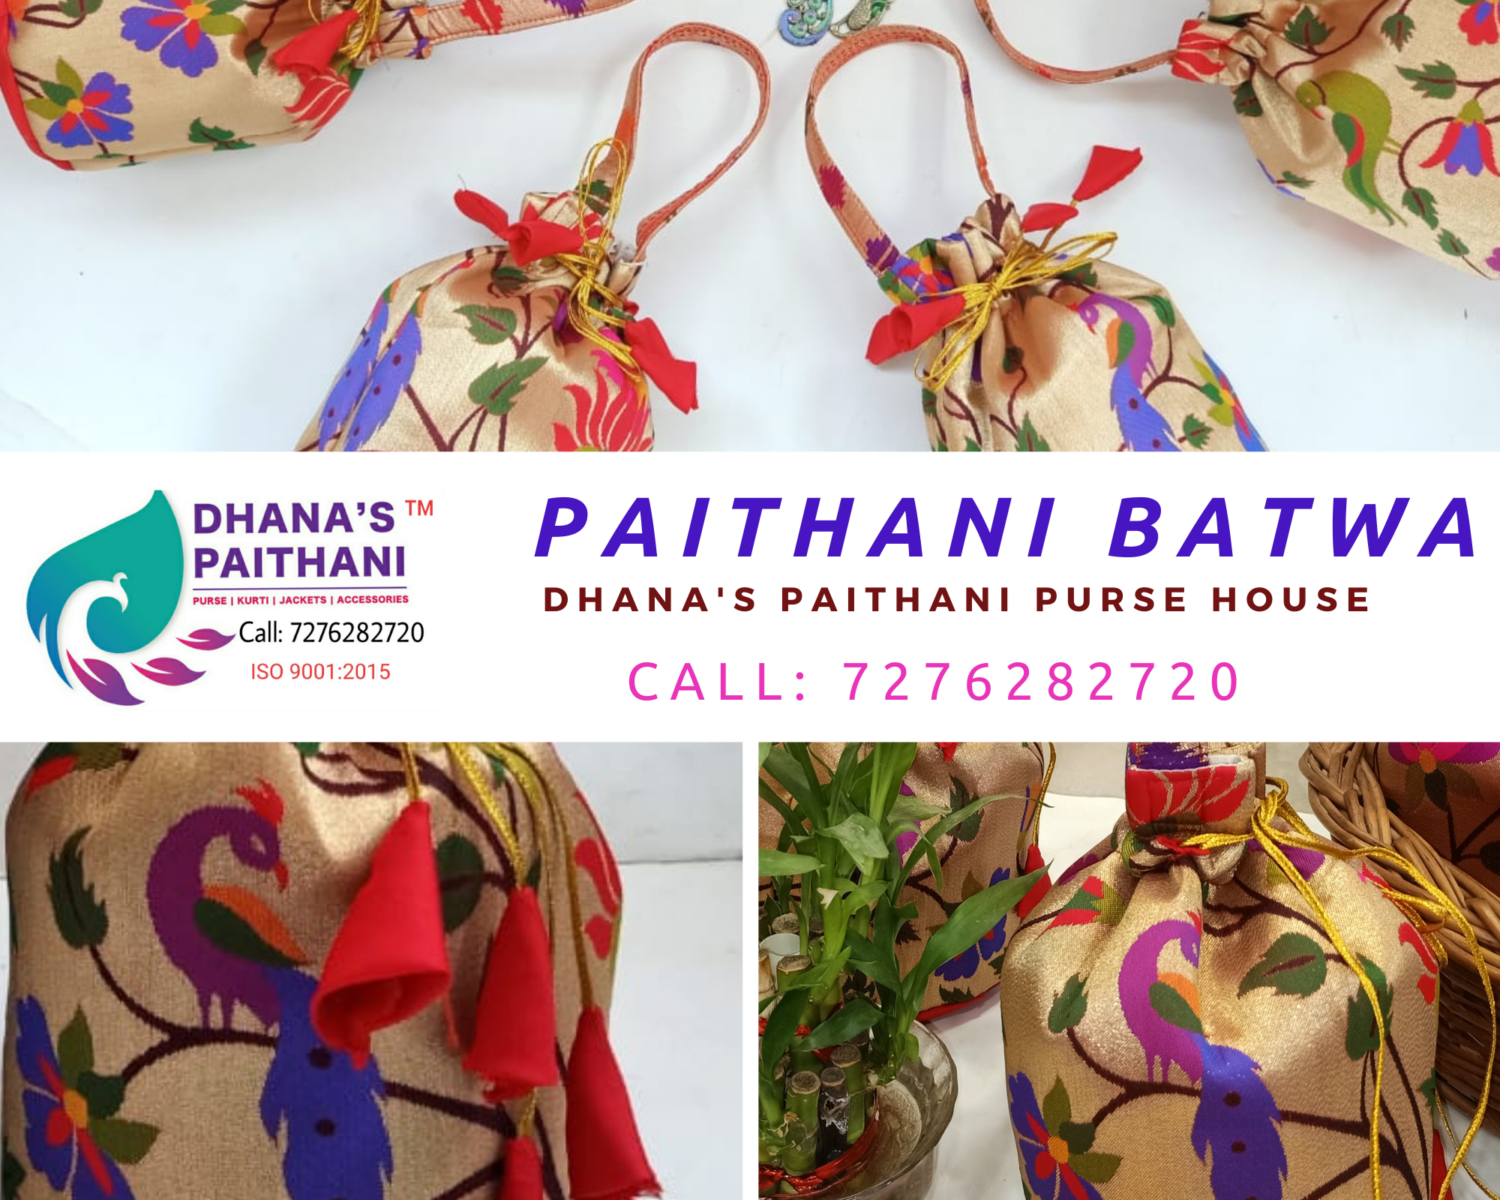 paithani mobile cover - Dhana's Paithani Purse House